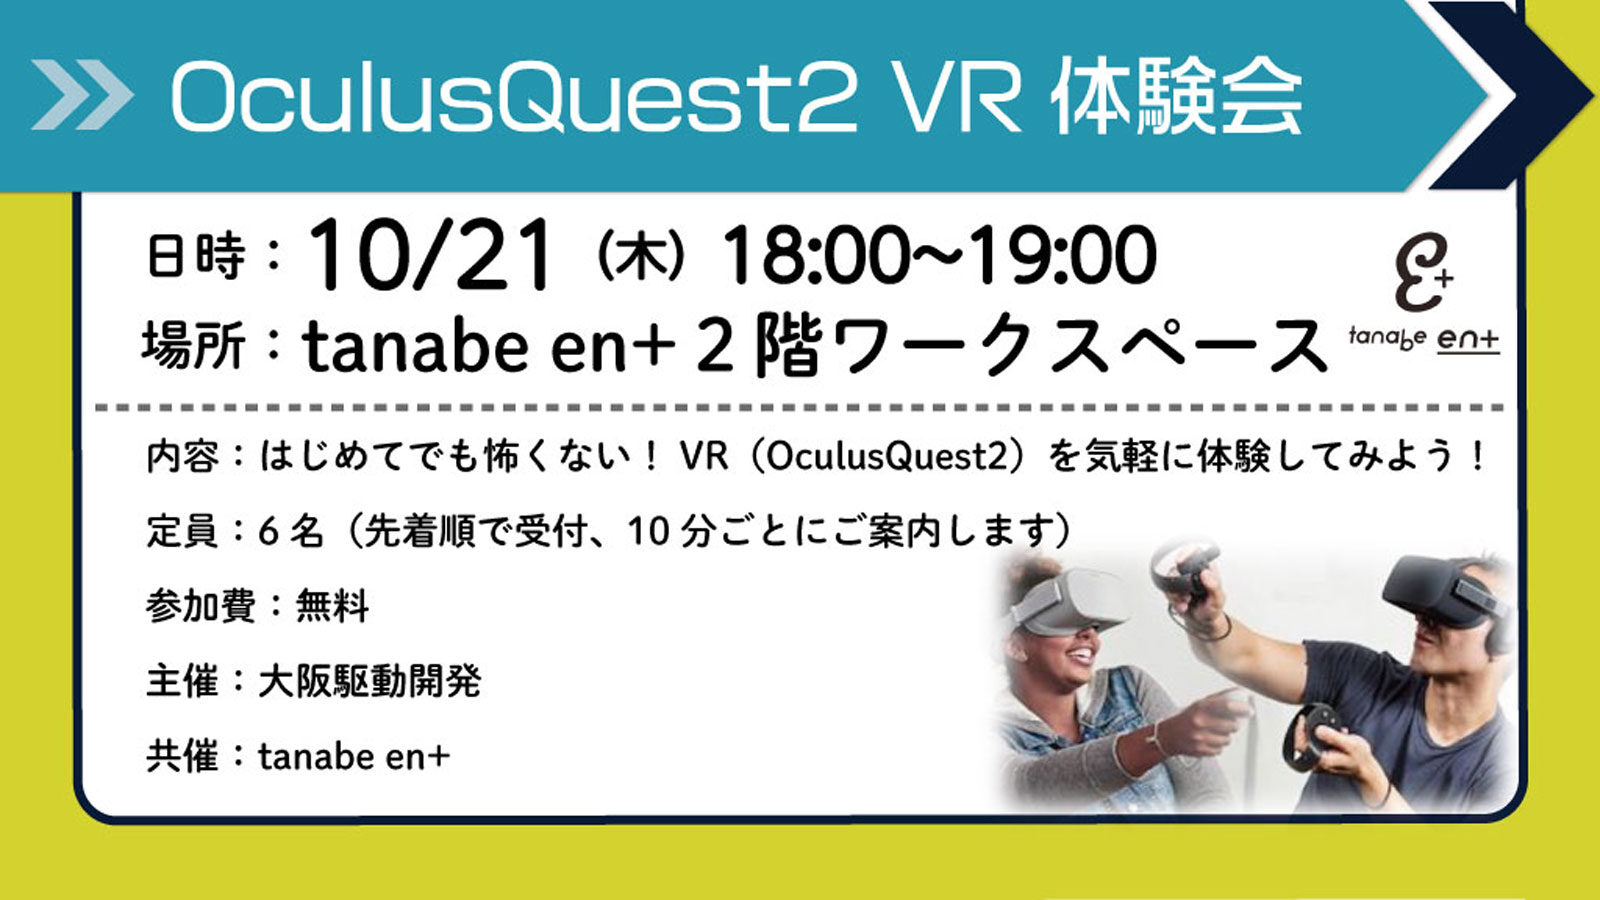 OculusQuest2 VR体験会